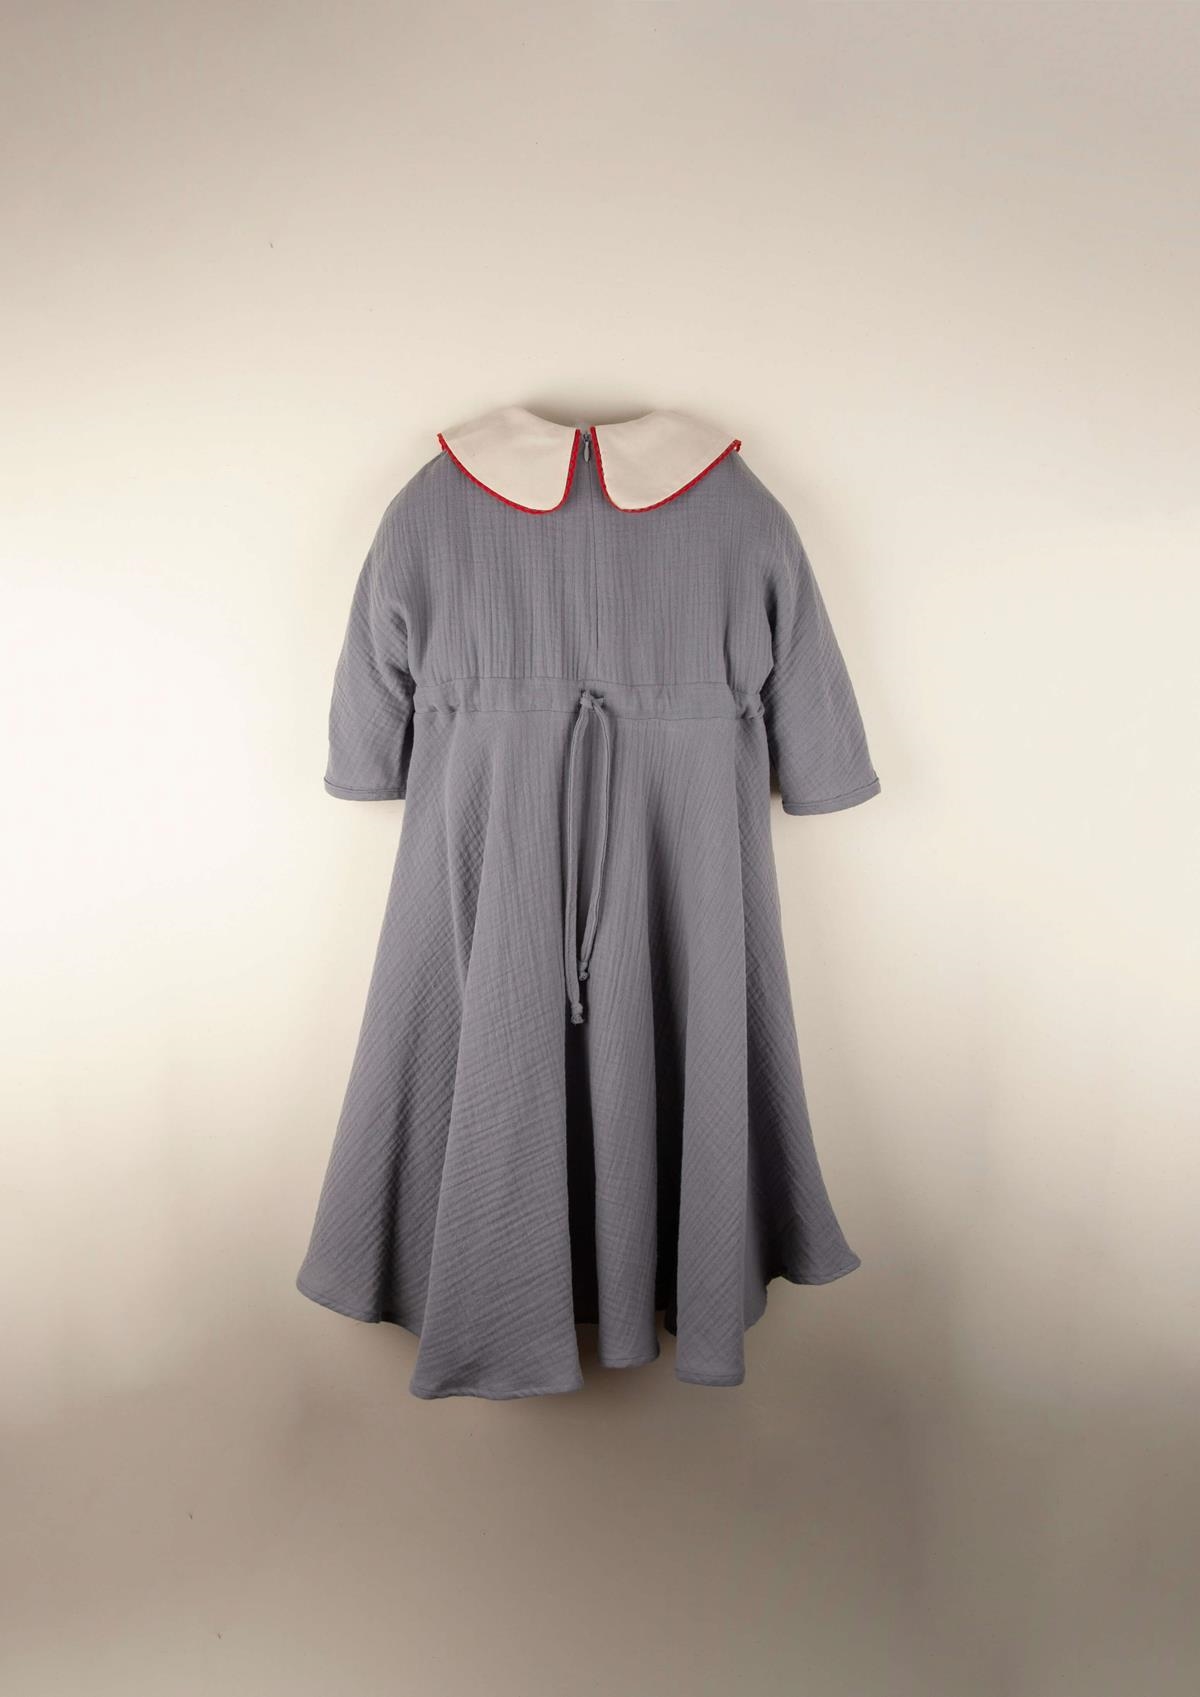 Mod.30.3 Greyish-blue organic dress with embroidered collar | SS22 Mod.30.3 Greyish-blue organic dress with embroidered collar | 1